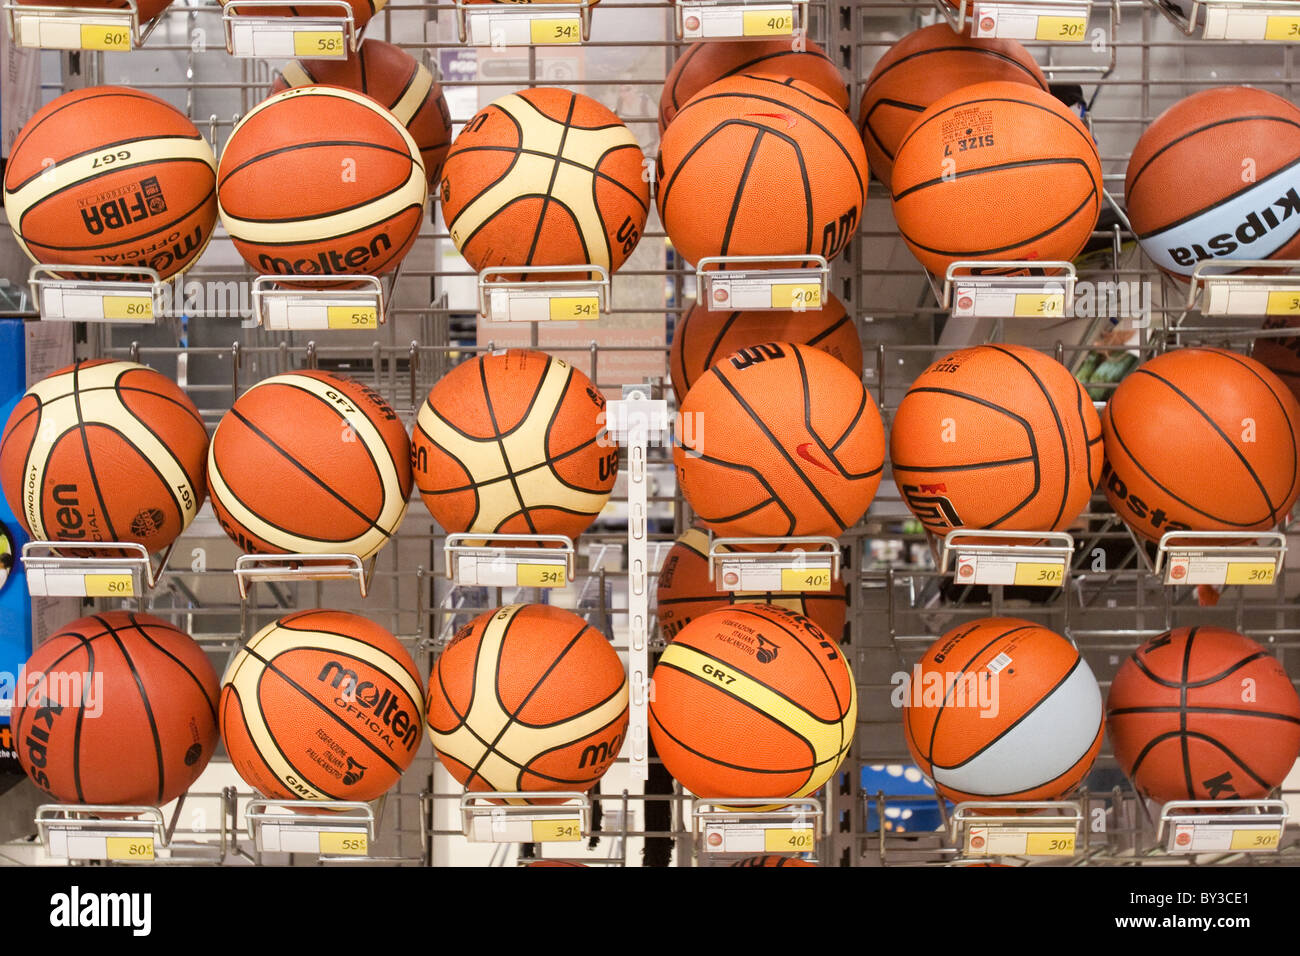 Basketball-Kugeln angezeigten Regale "Decathlon" Sportbekleidung Shop in Rom Italien Europa Stockfoto